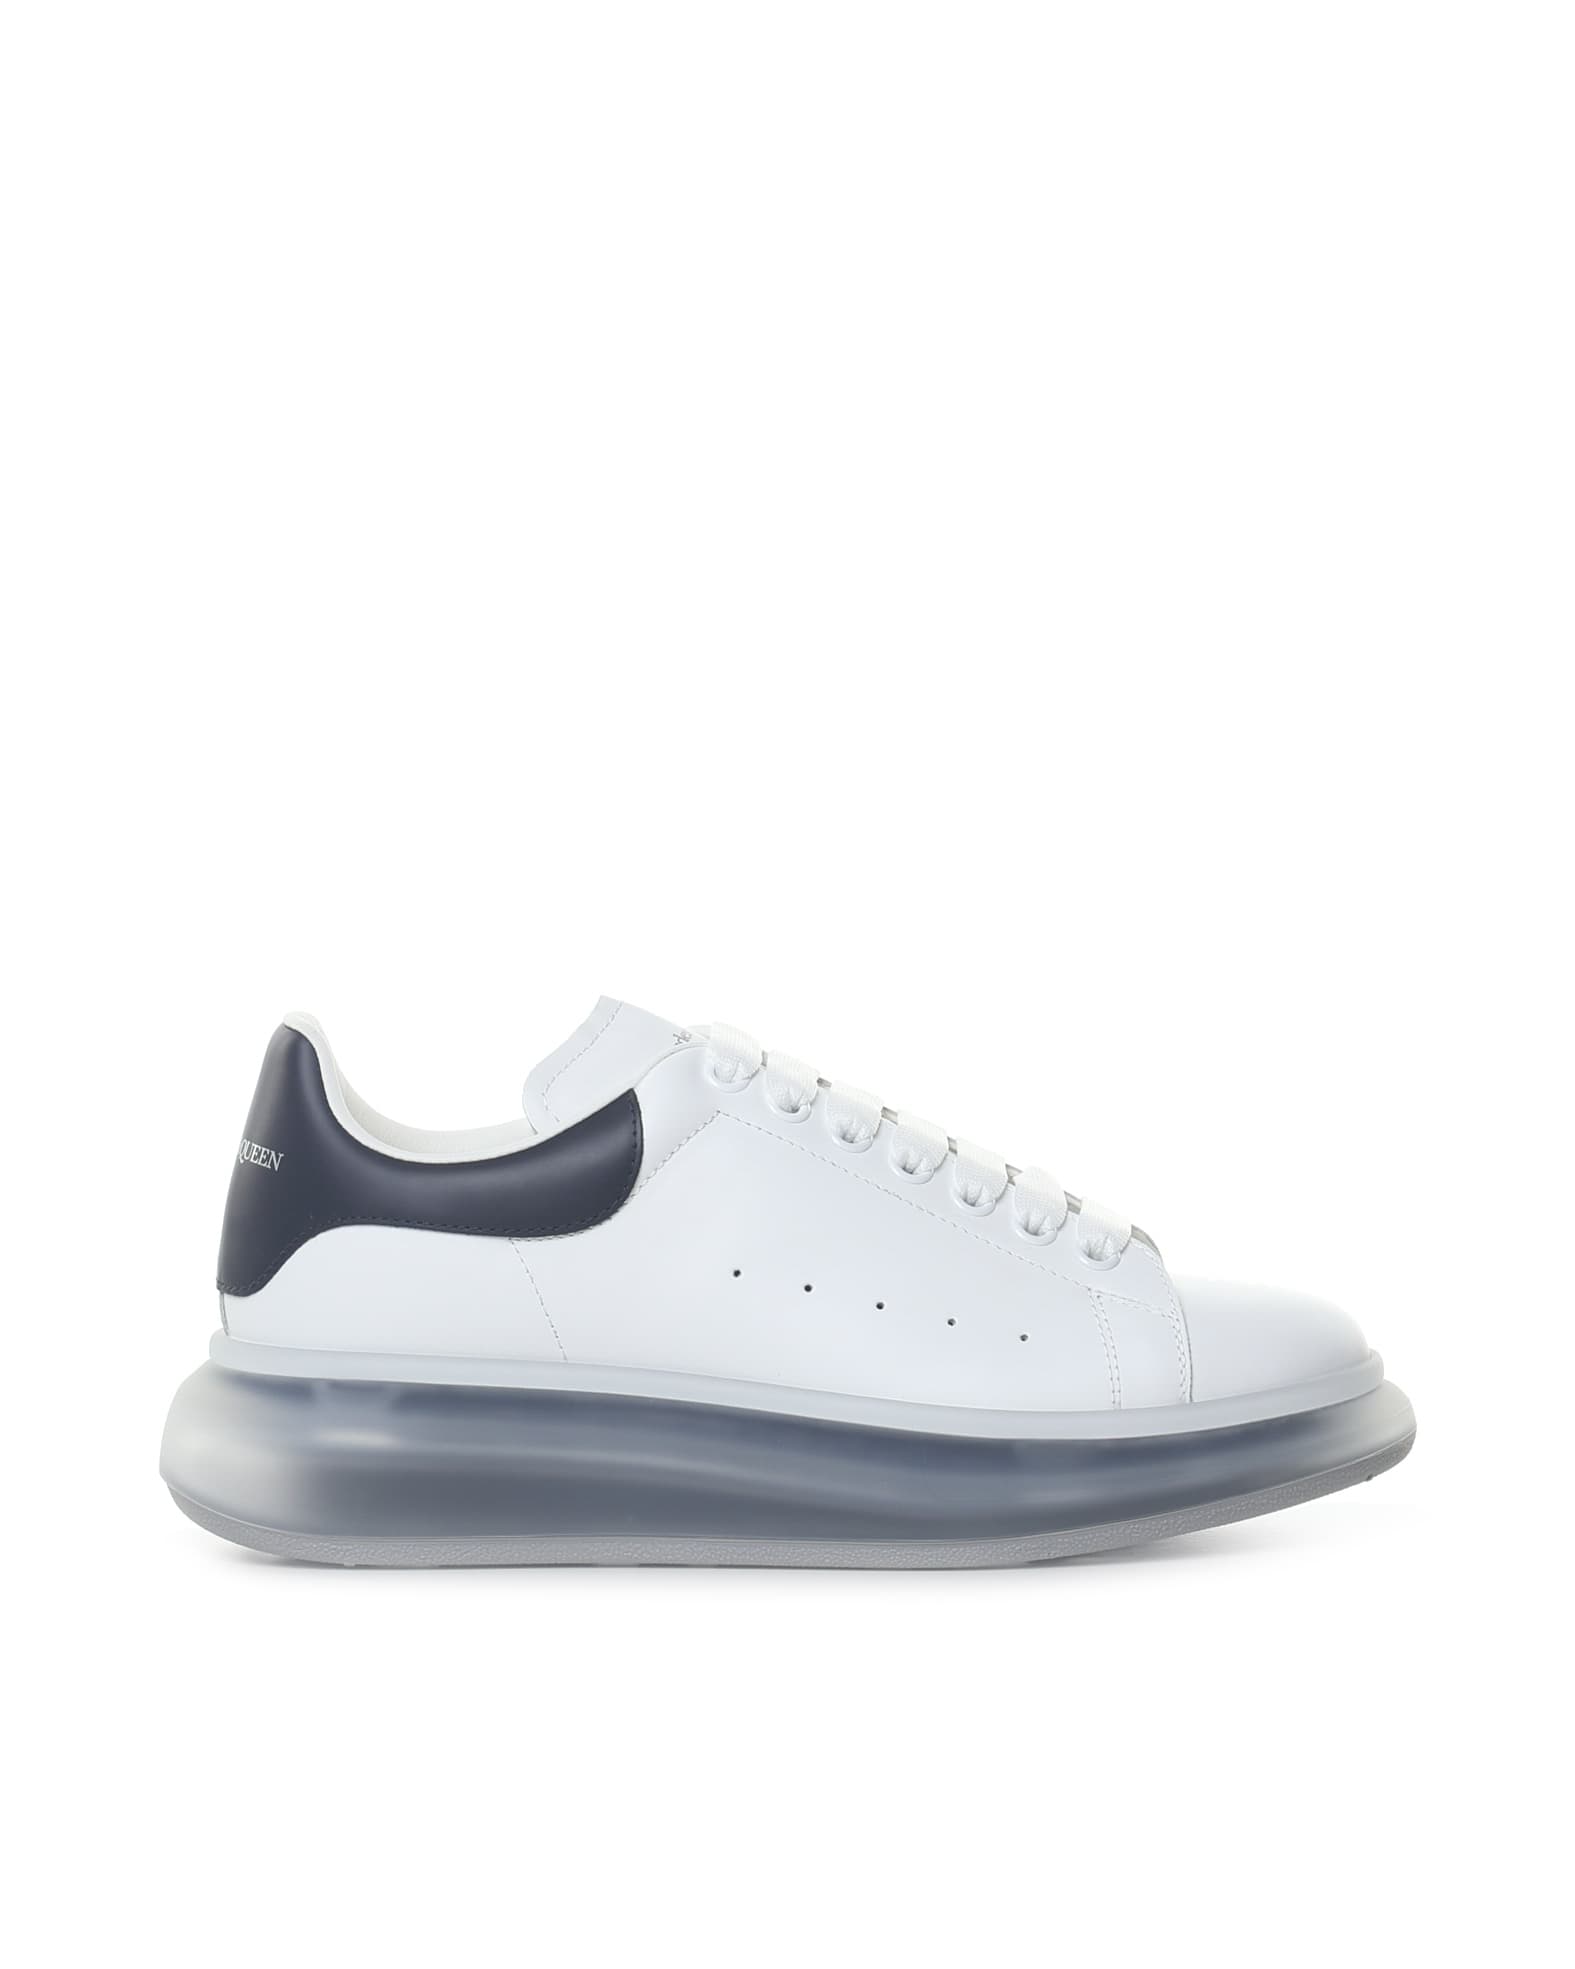 Alexander Mcqueen Oversized Shoe In White/black